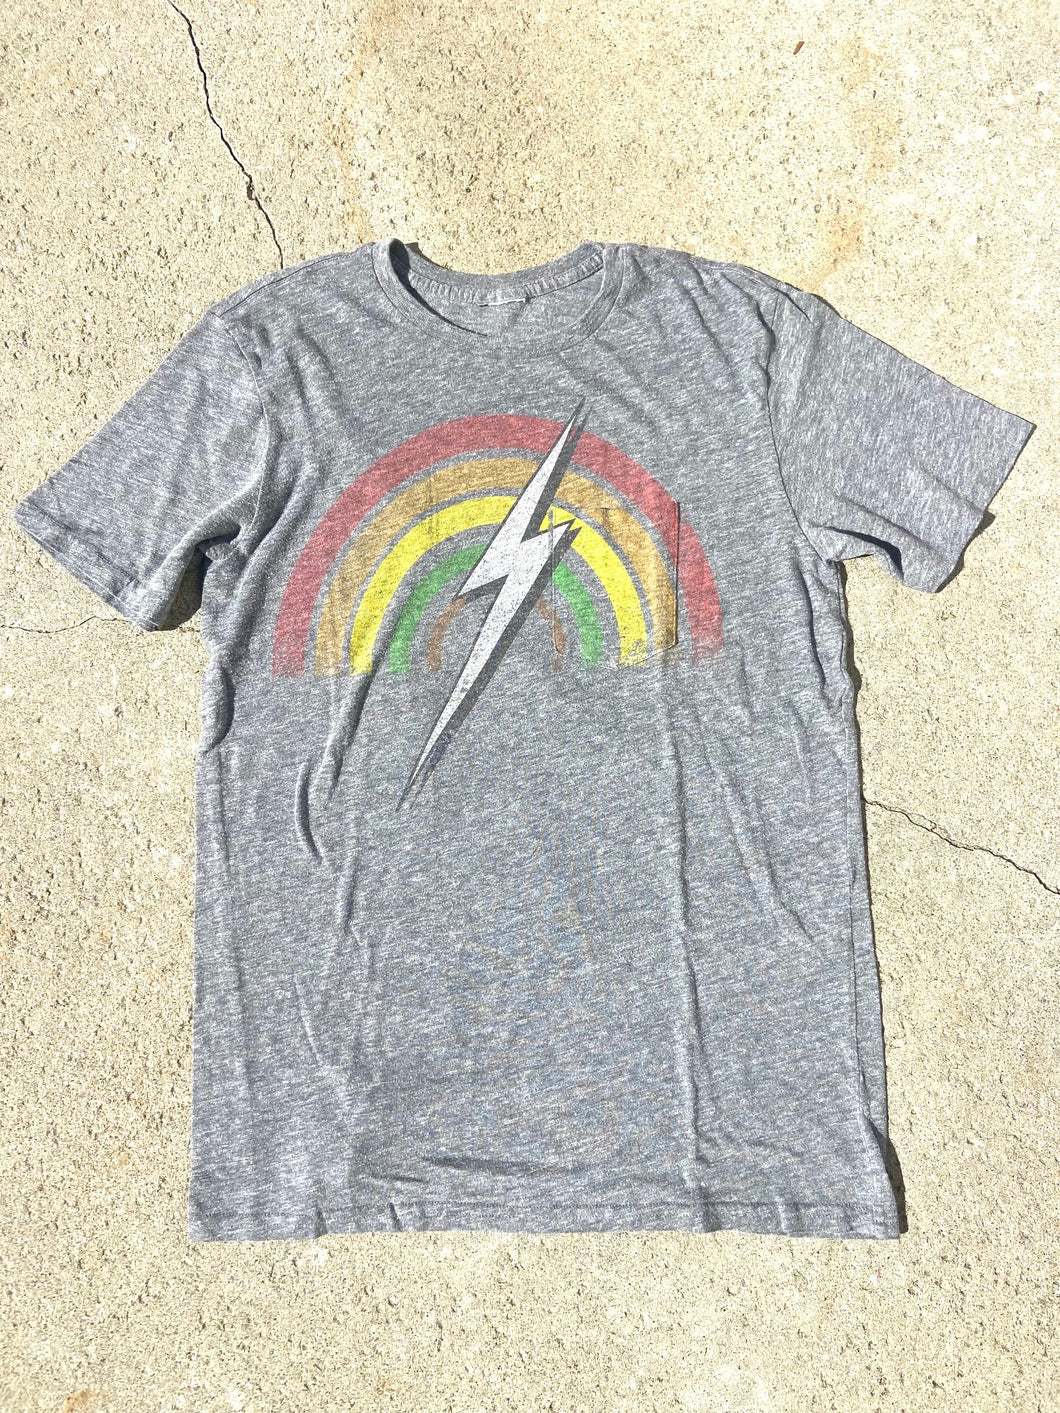 Size Large, Grey Lightning Bolt Rainbow design vintage pocket tee